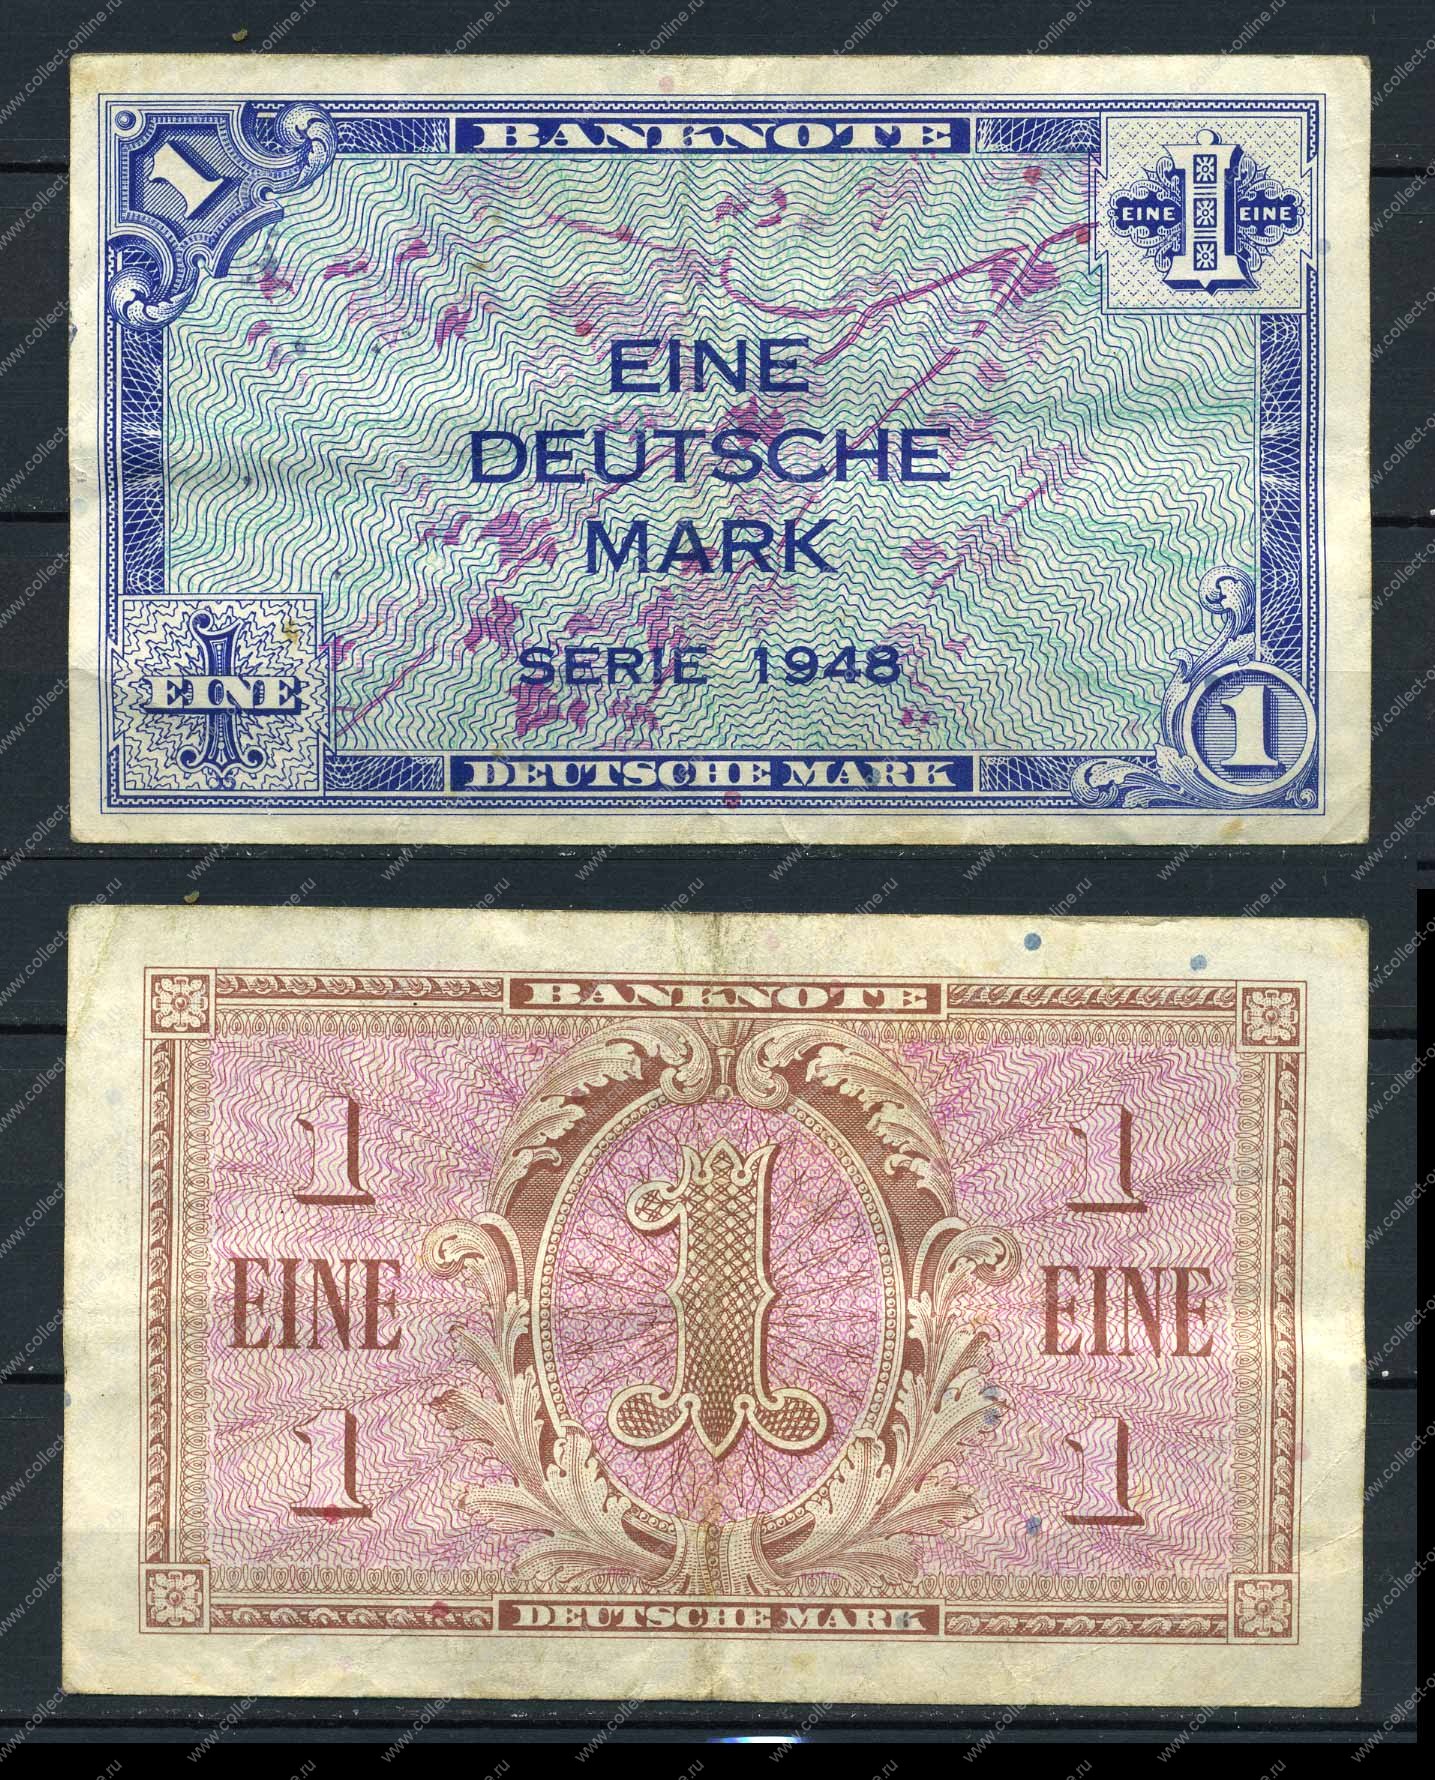 Deutsche mark. Марка ФРГ 1948. Марка ФРГ банкноты 1948. Немецкая марка 1948 года. 1 Немецкая марка.